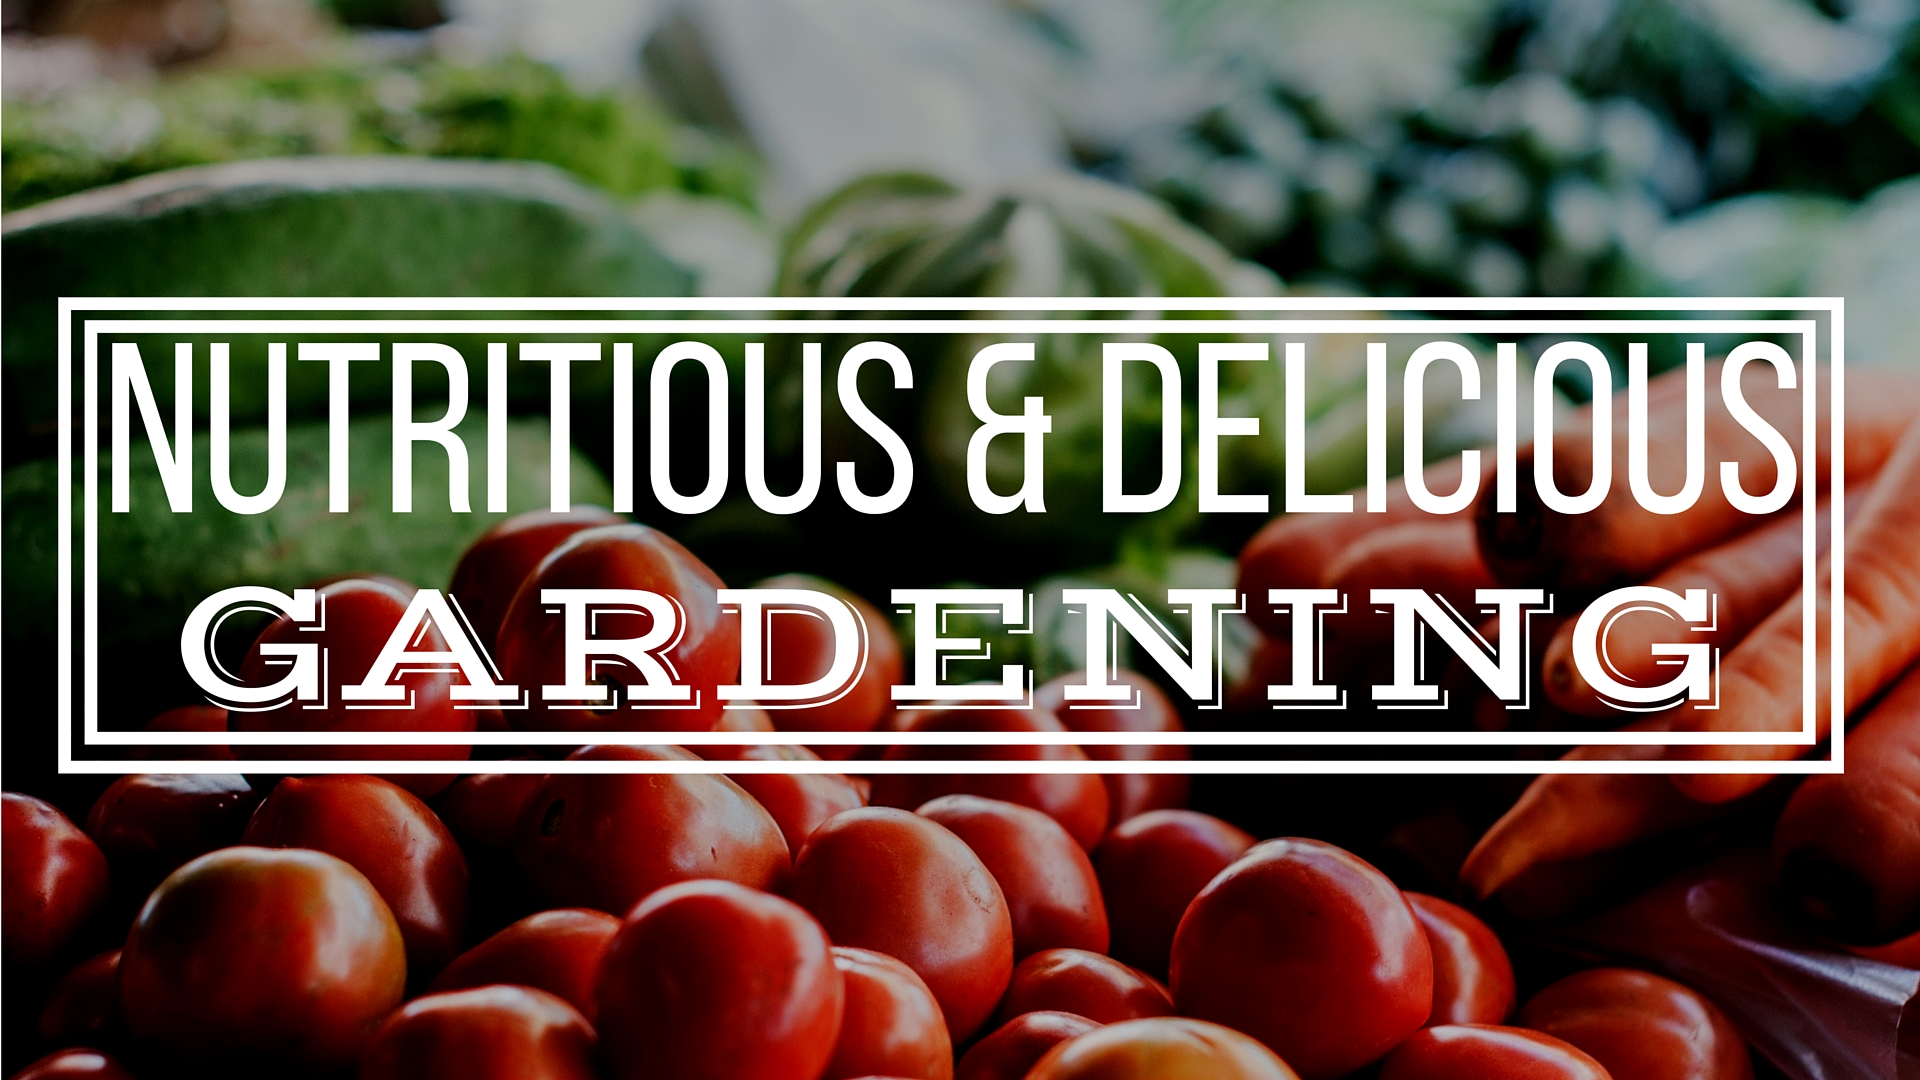 Super Nutritious & Delicious Gardening Techniques...